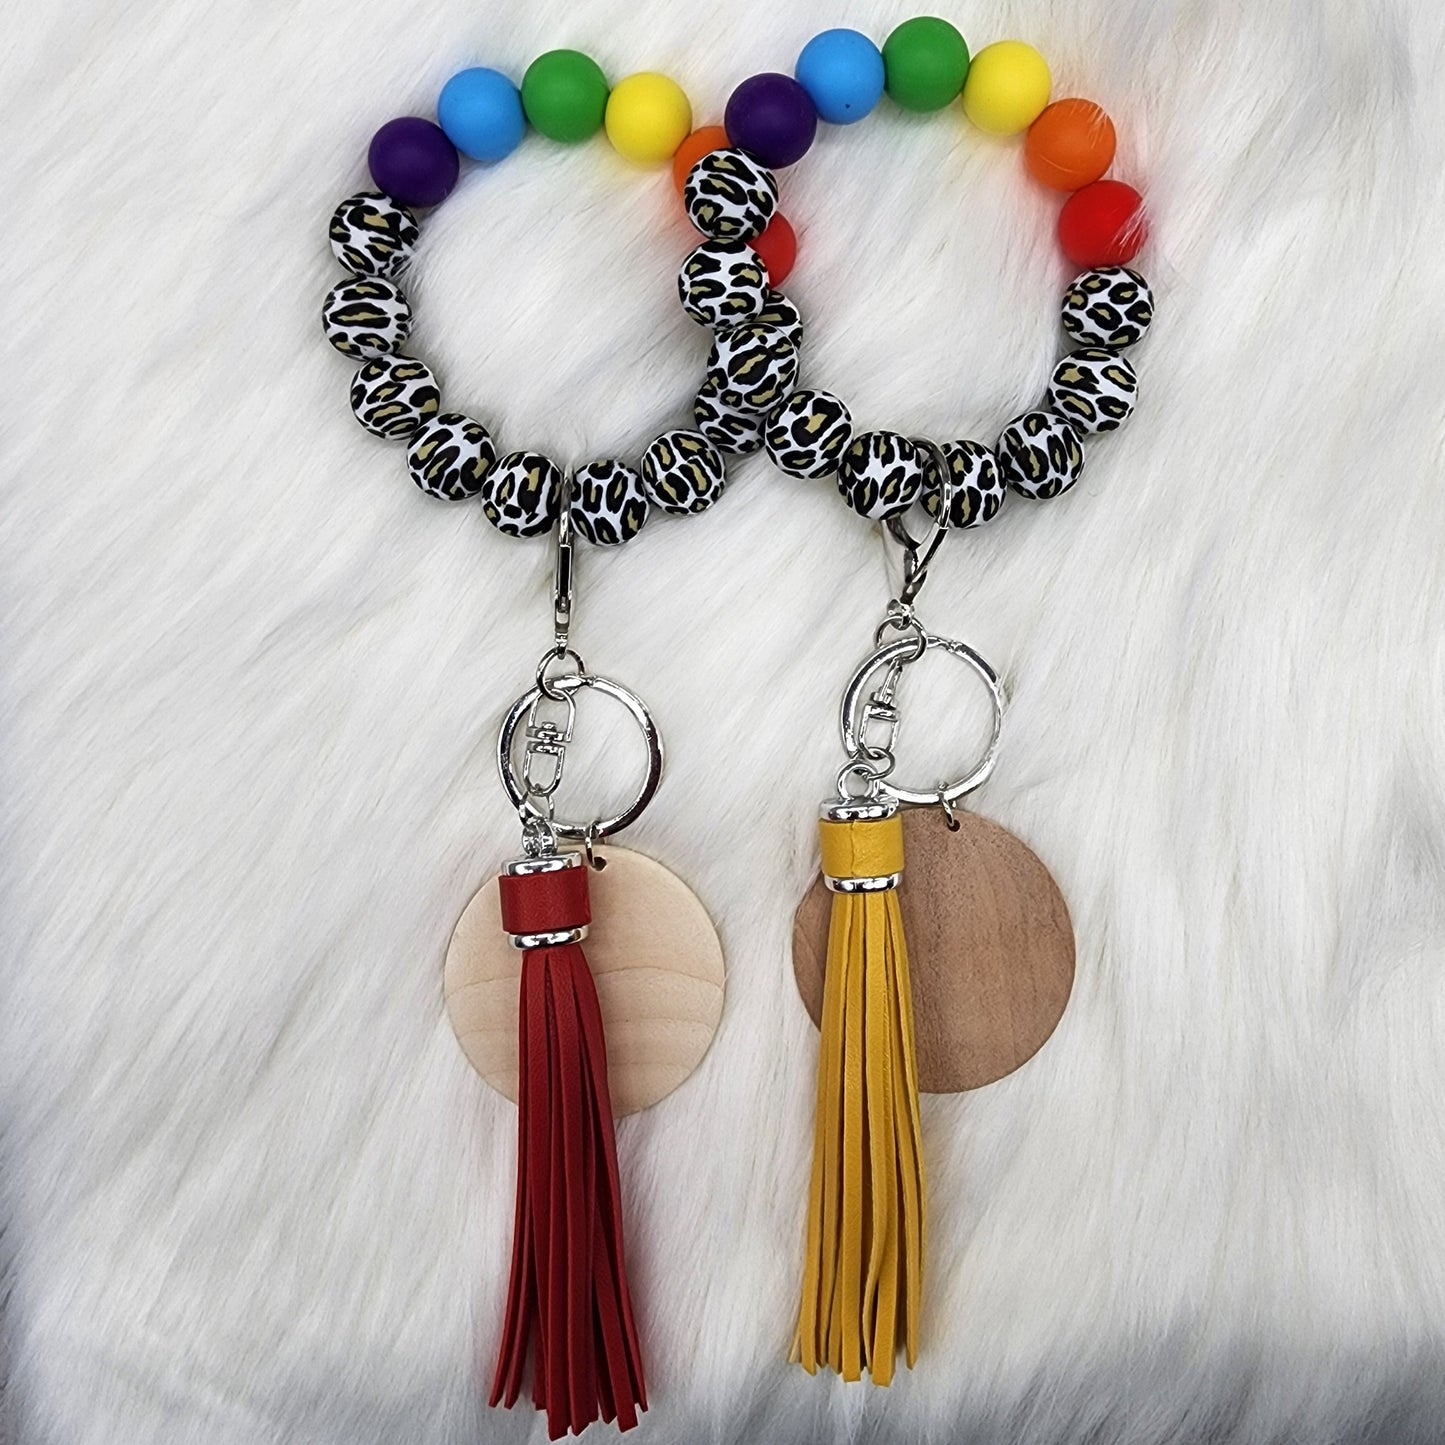 Rainbow Silicone Beads Bracelet With Disc